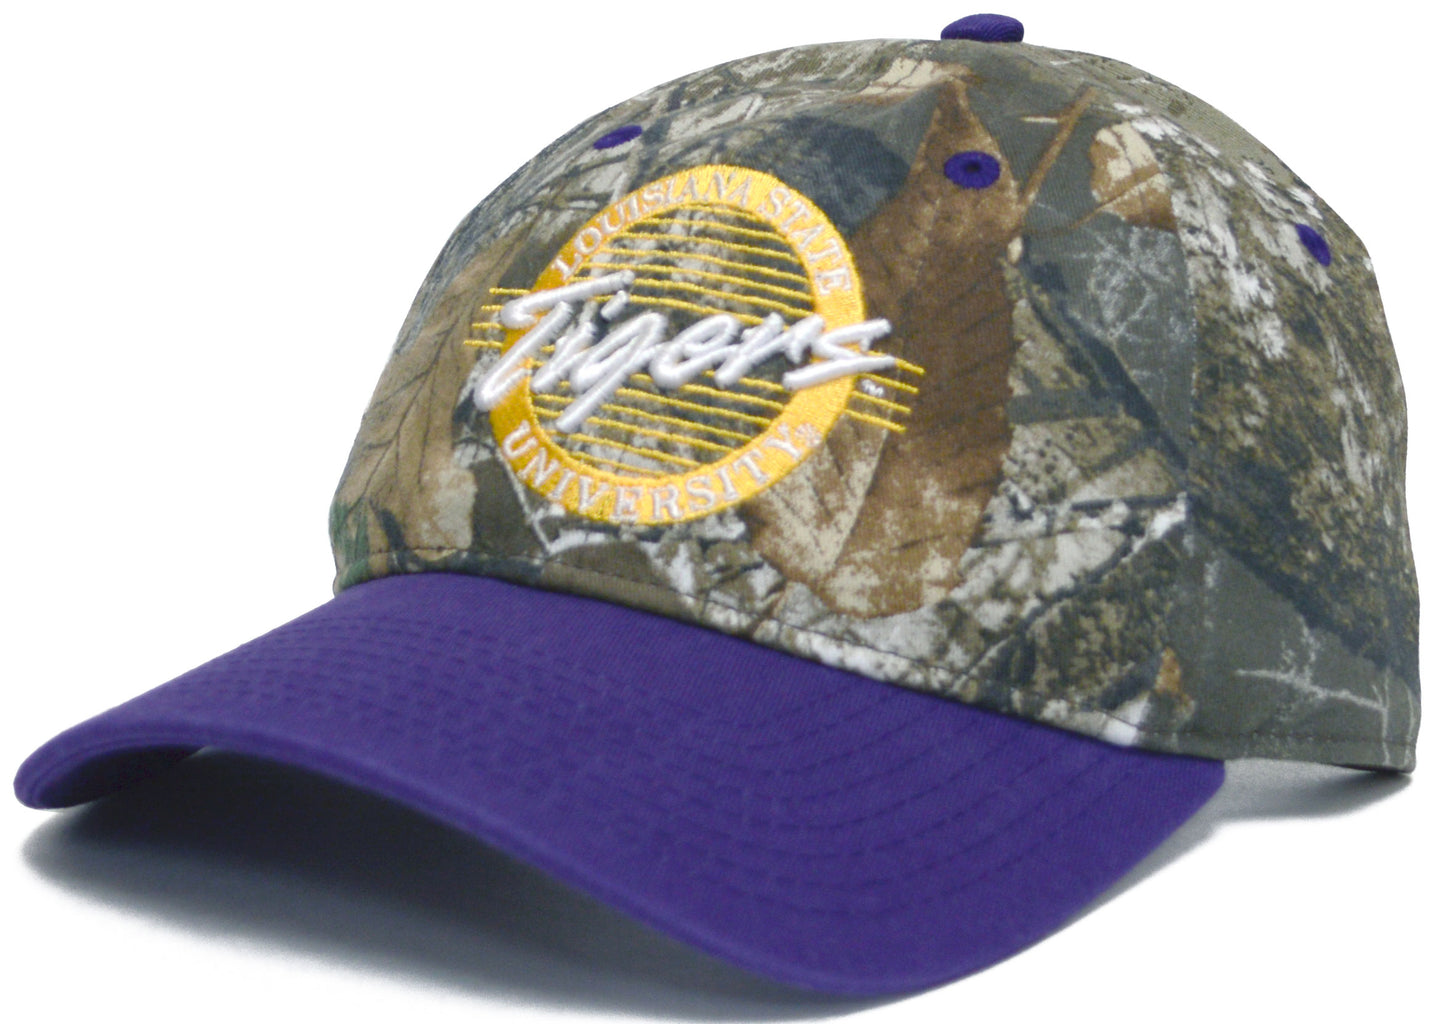 LSU Tigers The Game Men's Edge Camo Strapback Adjustable Hat